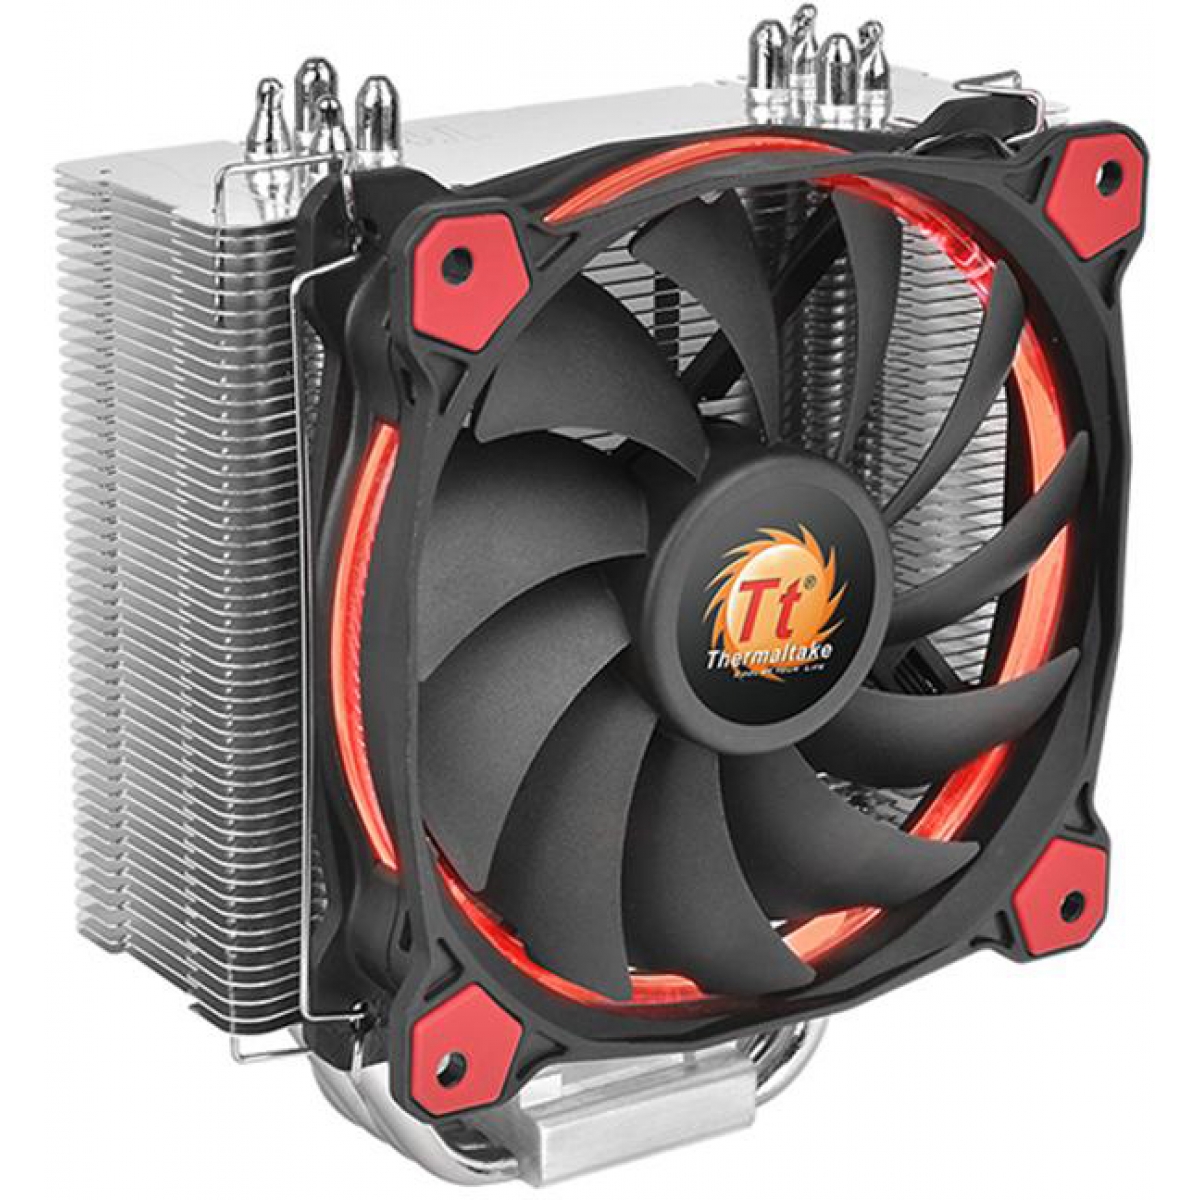 Cooler para Processador Thermaltake Riing Silent 12, Red 120mm, Intel-AMD, CL-P022-AL12RE-A